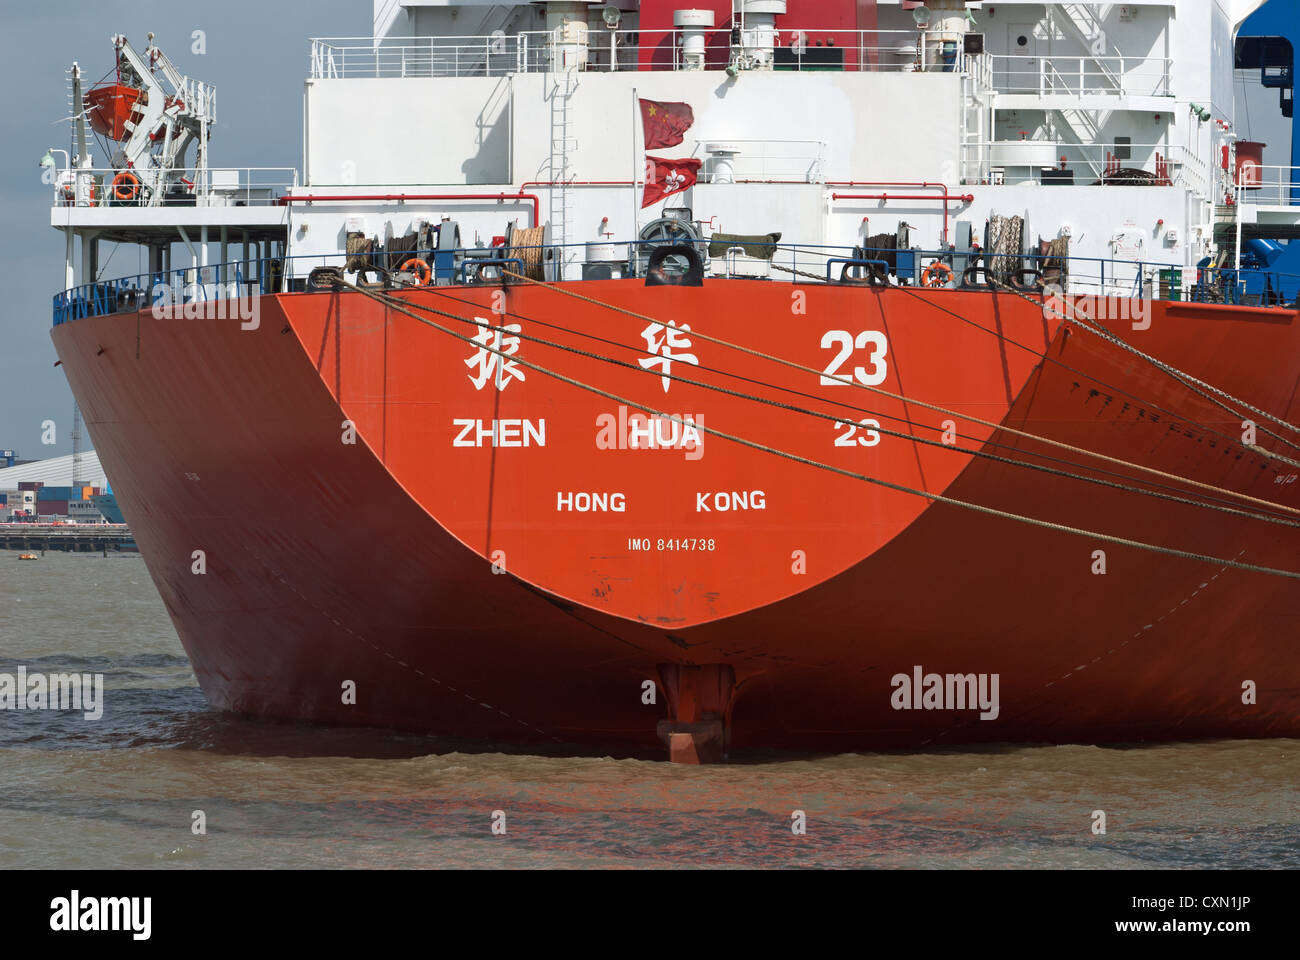 Zhen Hua 23, transporteur de bateau, port de Felixstowe, Suffolk, UK. Banque D'Images